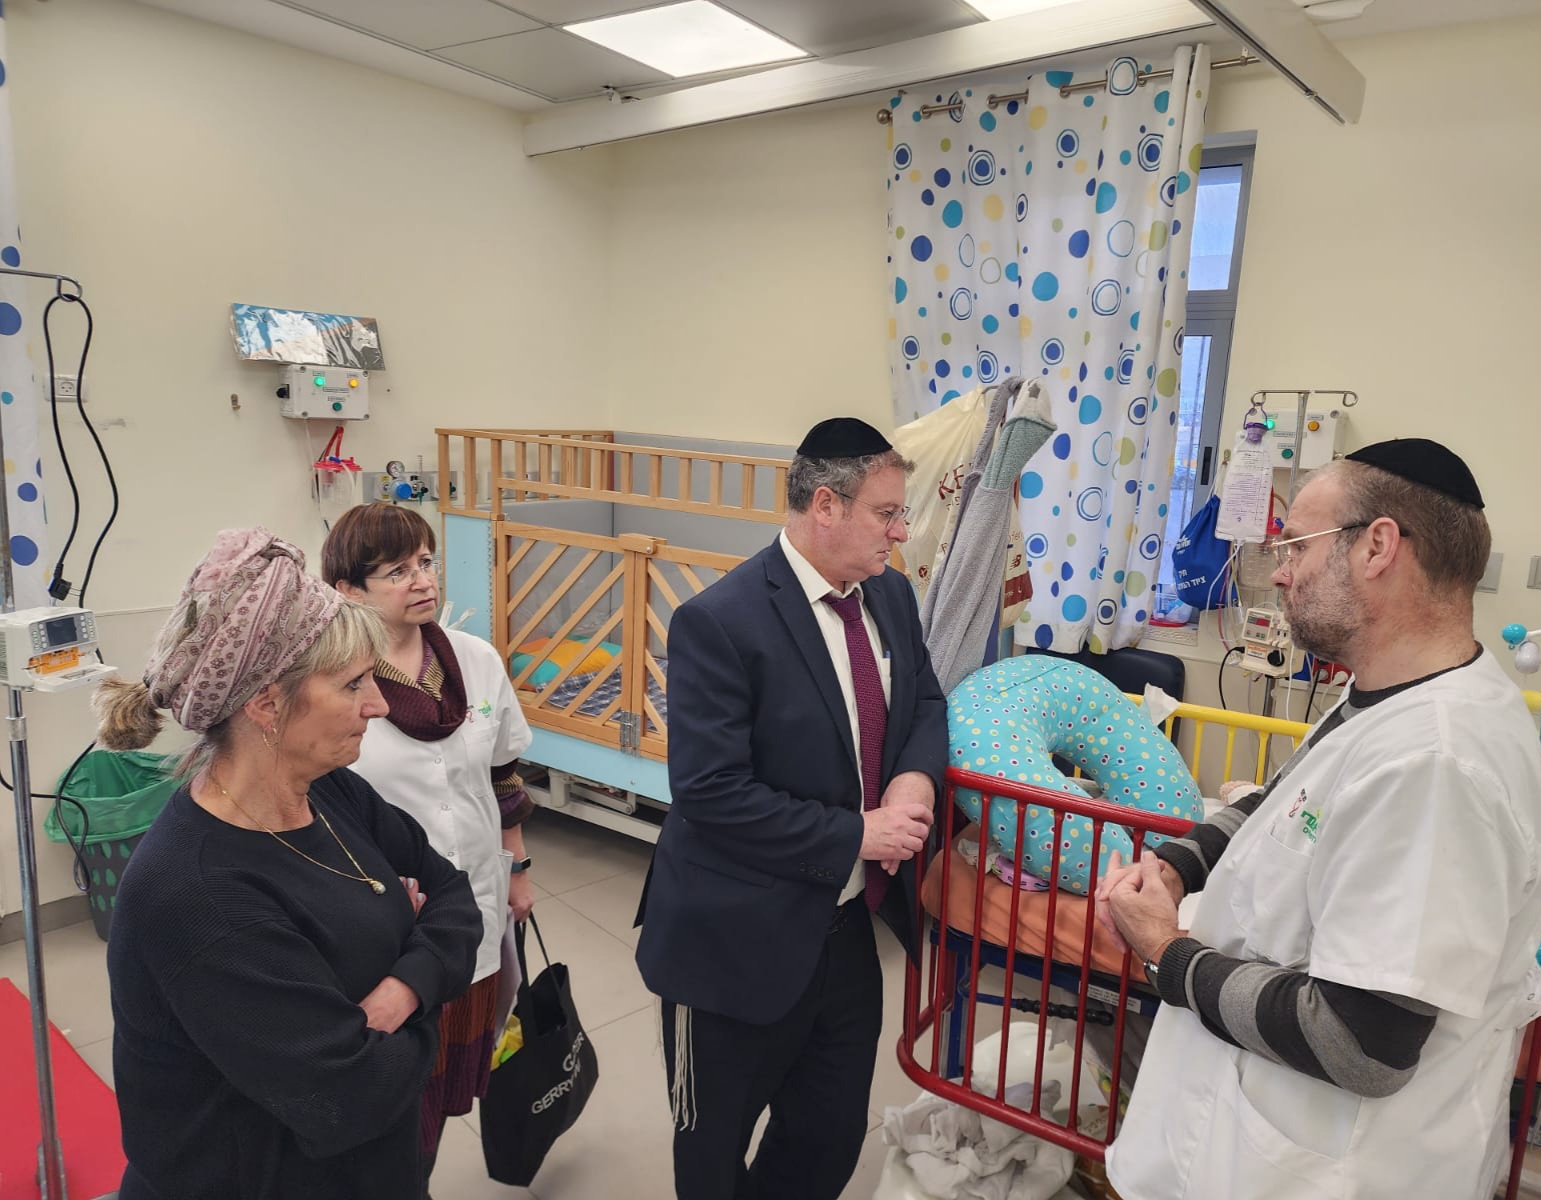 Rabbi Benny Fischer at ADI respiratory ward הרב בני פישר במחלקת מונשים בעדי